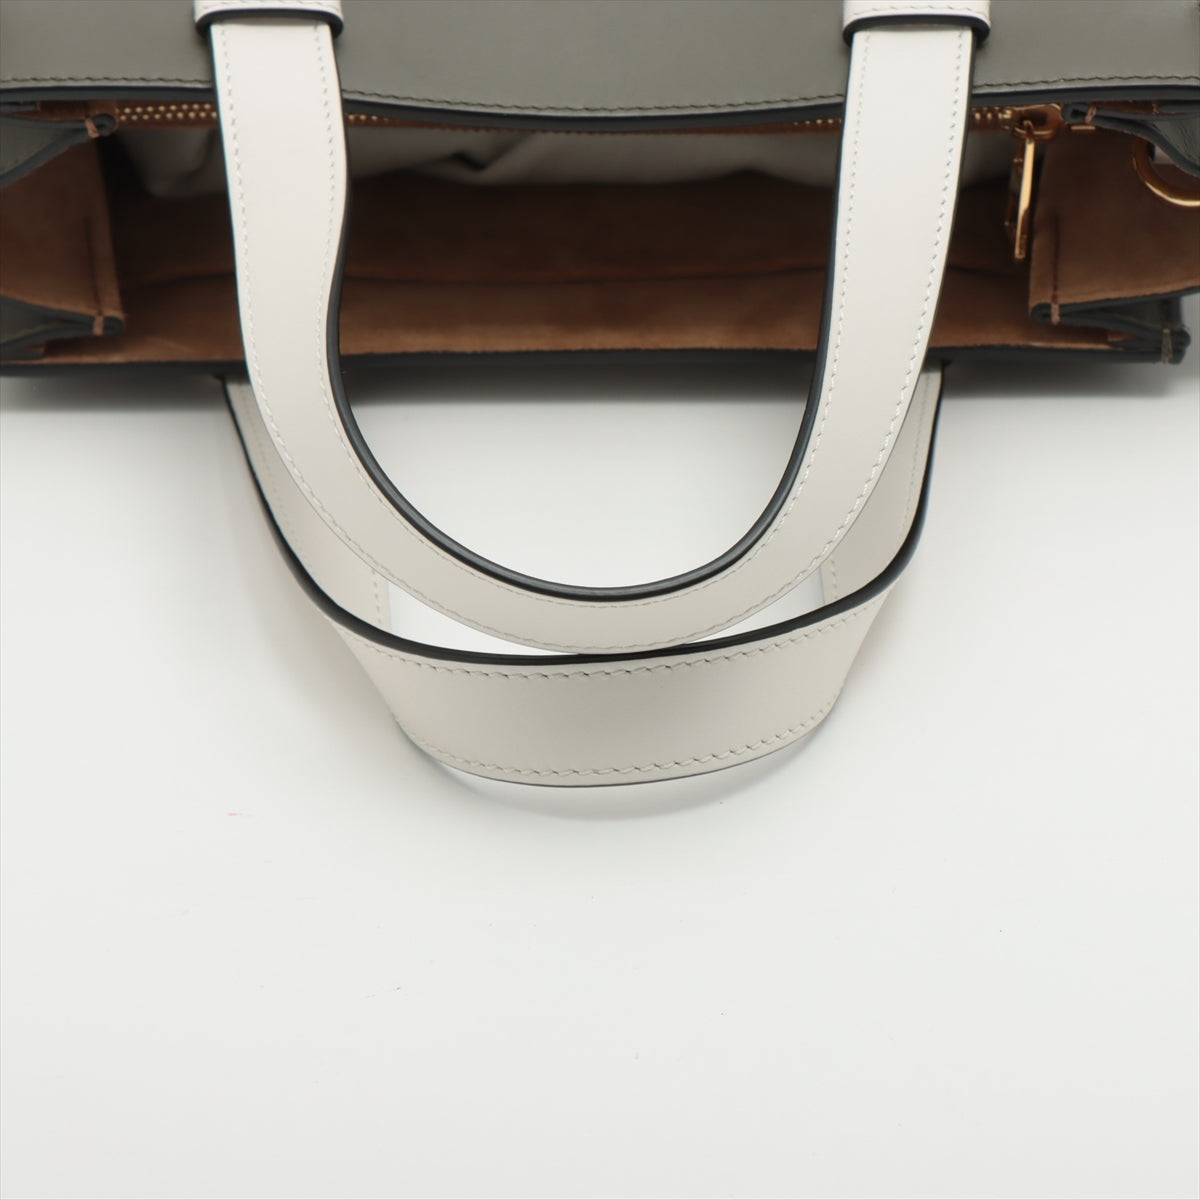 Loewe Gate top handle Leather 2 way tote bag Gray x white